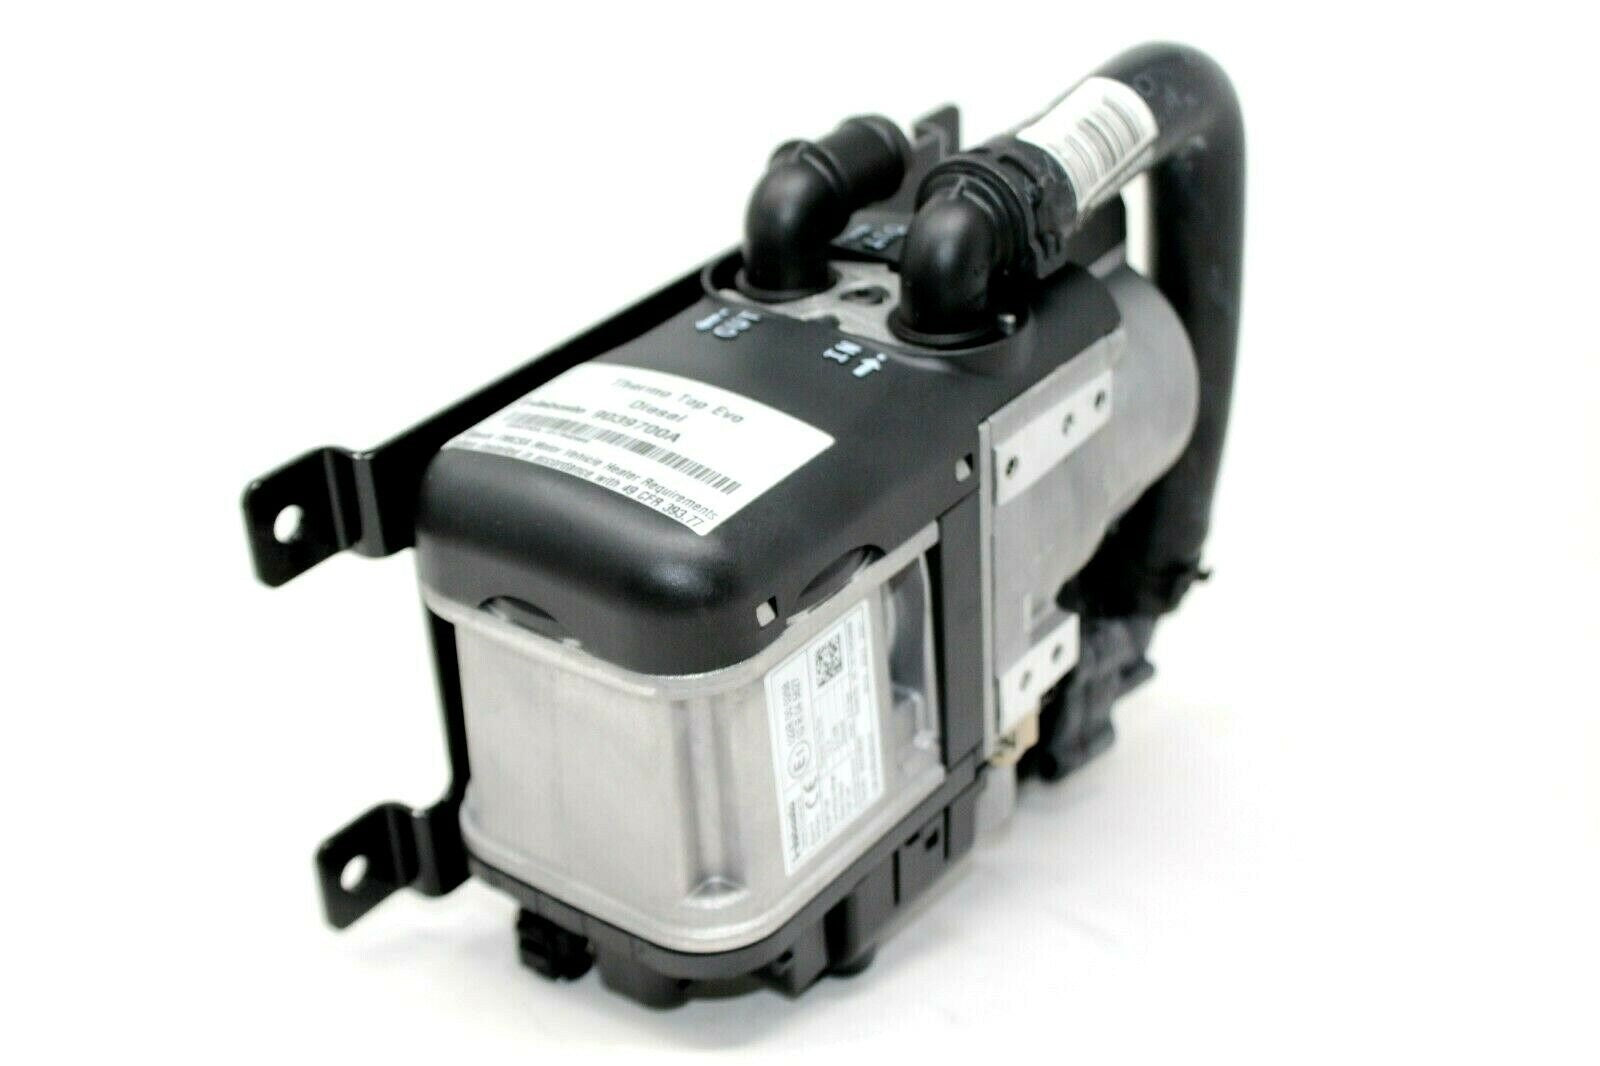 Webasto Thermo Top Evo Diesel 12V Coolant Heater Smartemp 3.0Bt Kit 5013920A